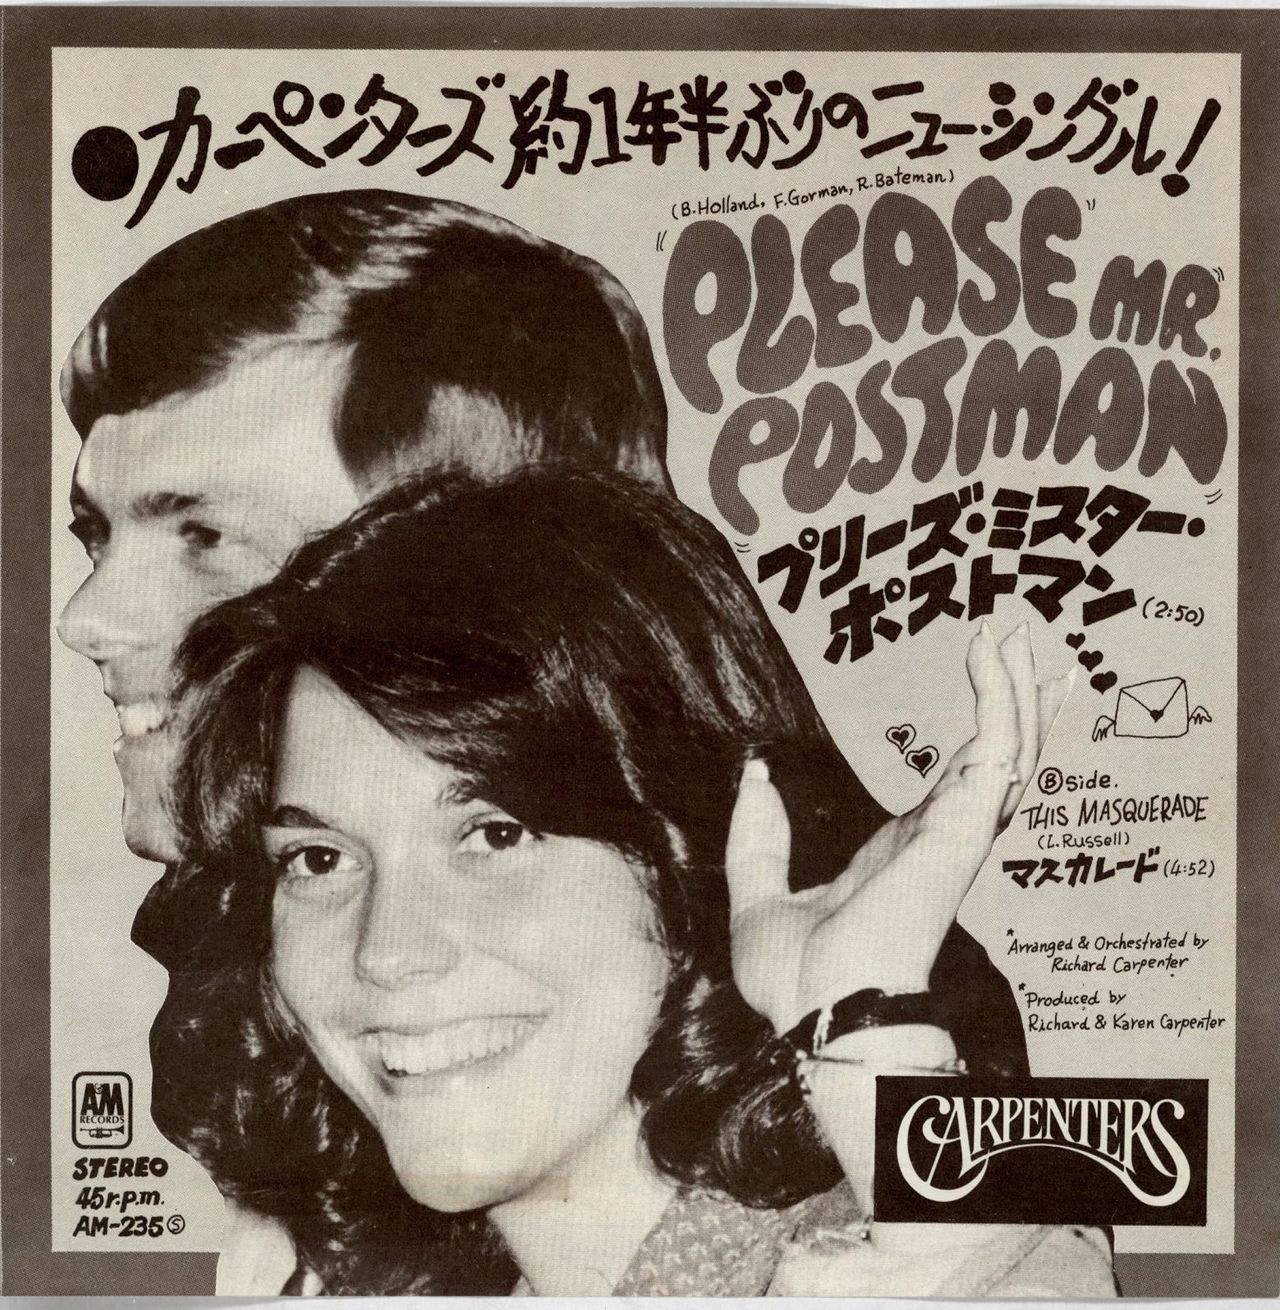 Carpenters Please Mr Postman - Sample Sleeve Japanese Promo 7" vinyl single (7 inch record / 45) AM-235